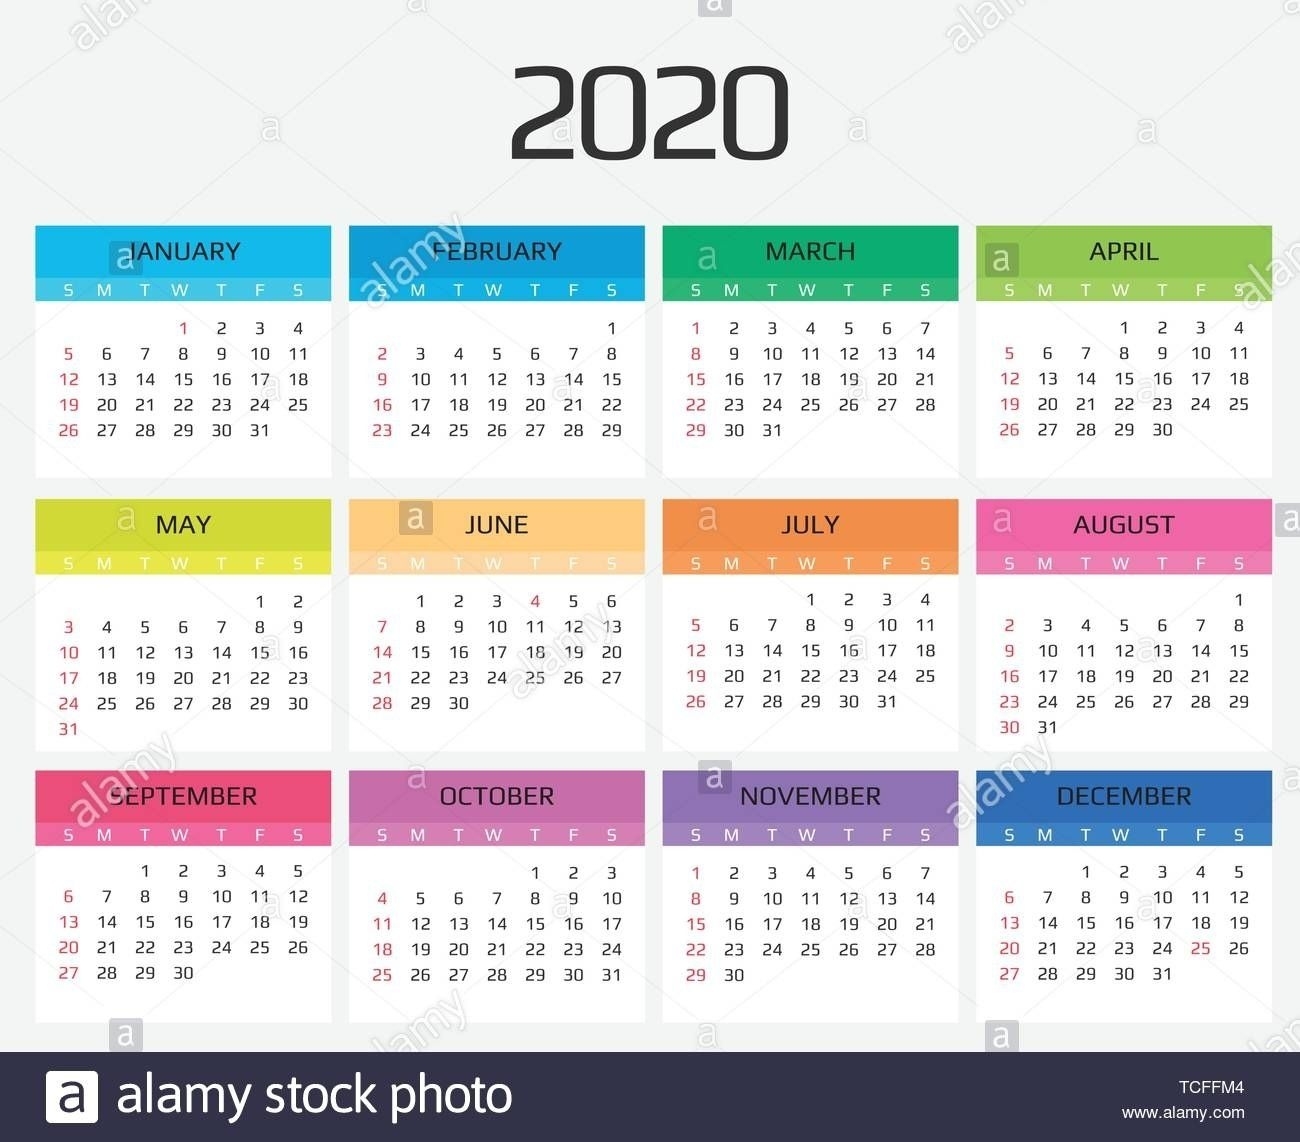 Dashing 2020 Calendar Hong Kong Template In 2020 | Calendar Calendar Template Hong Kong